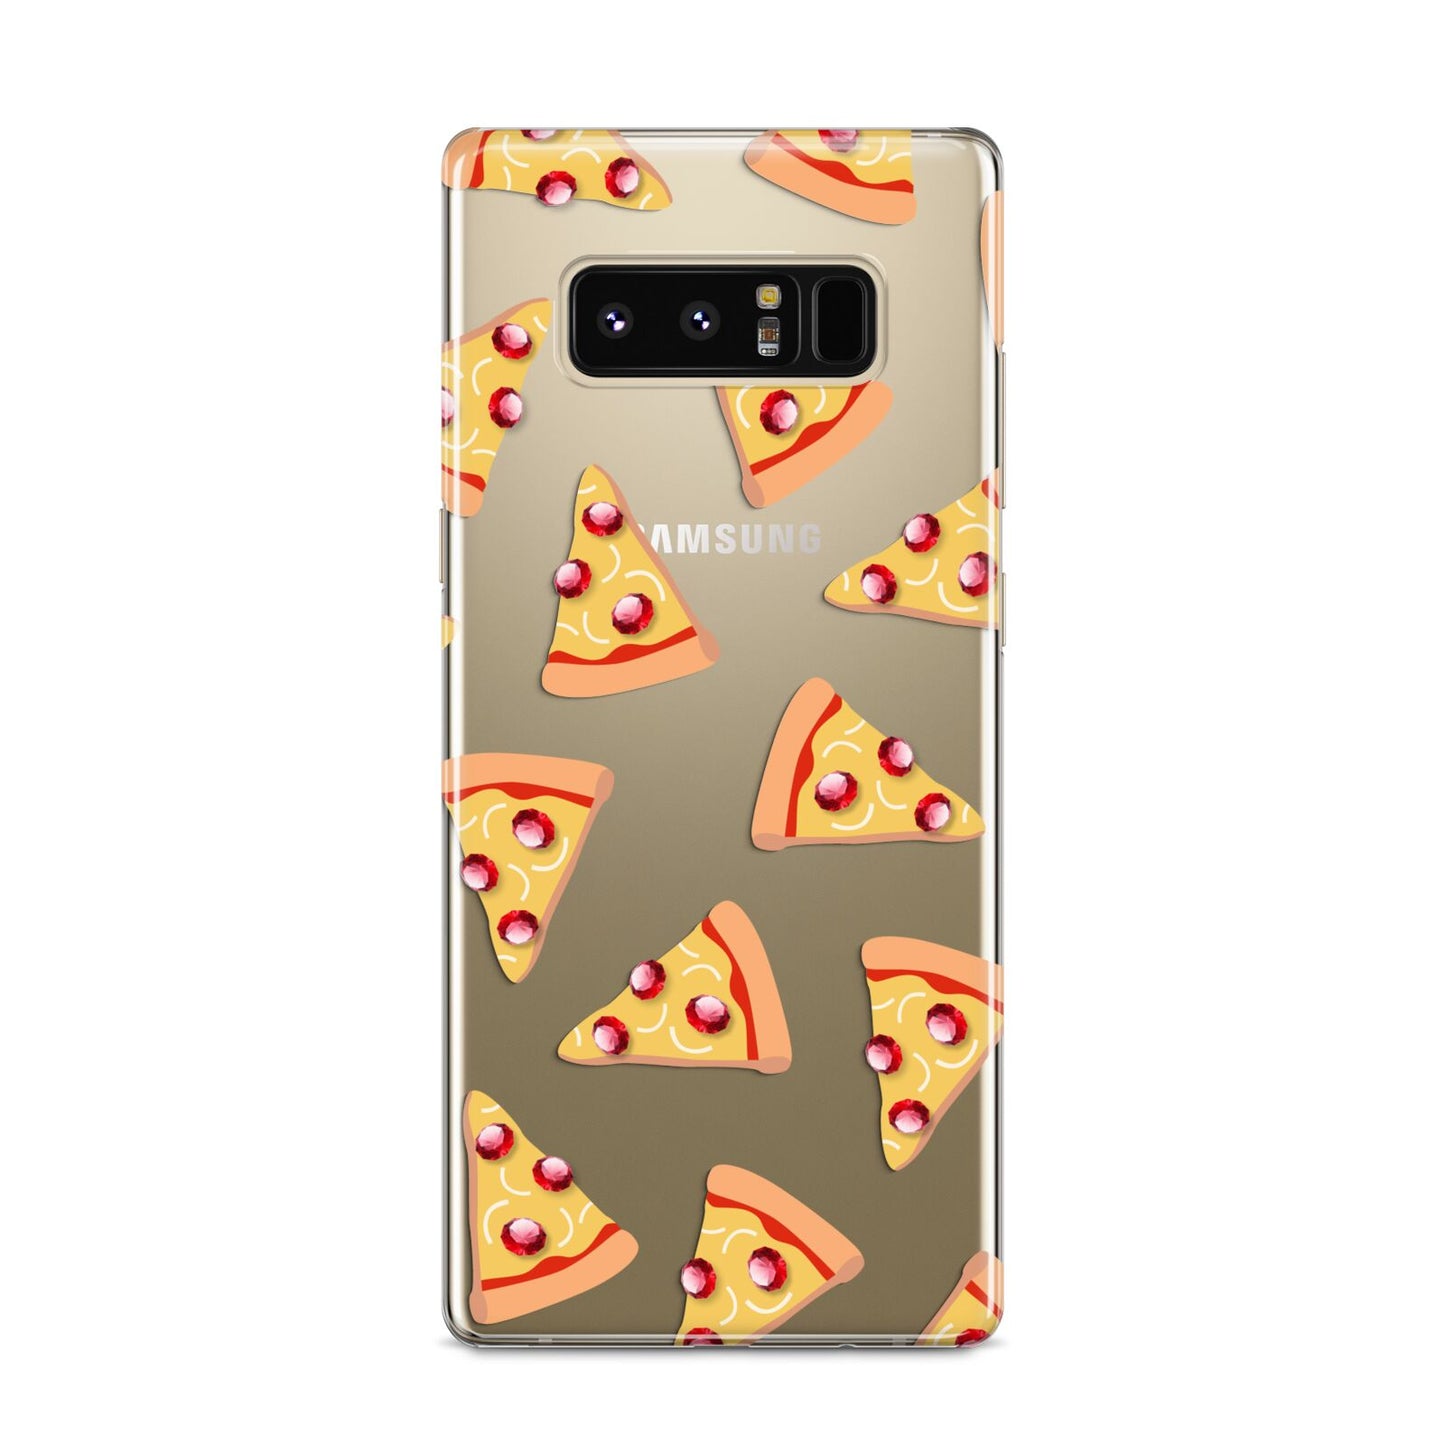 Rubies on Cartoon Pizza Slices Samsung Galaxy S8 Case